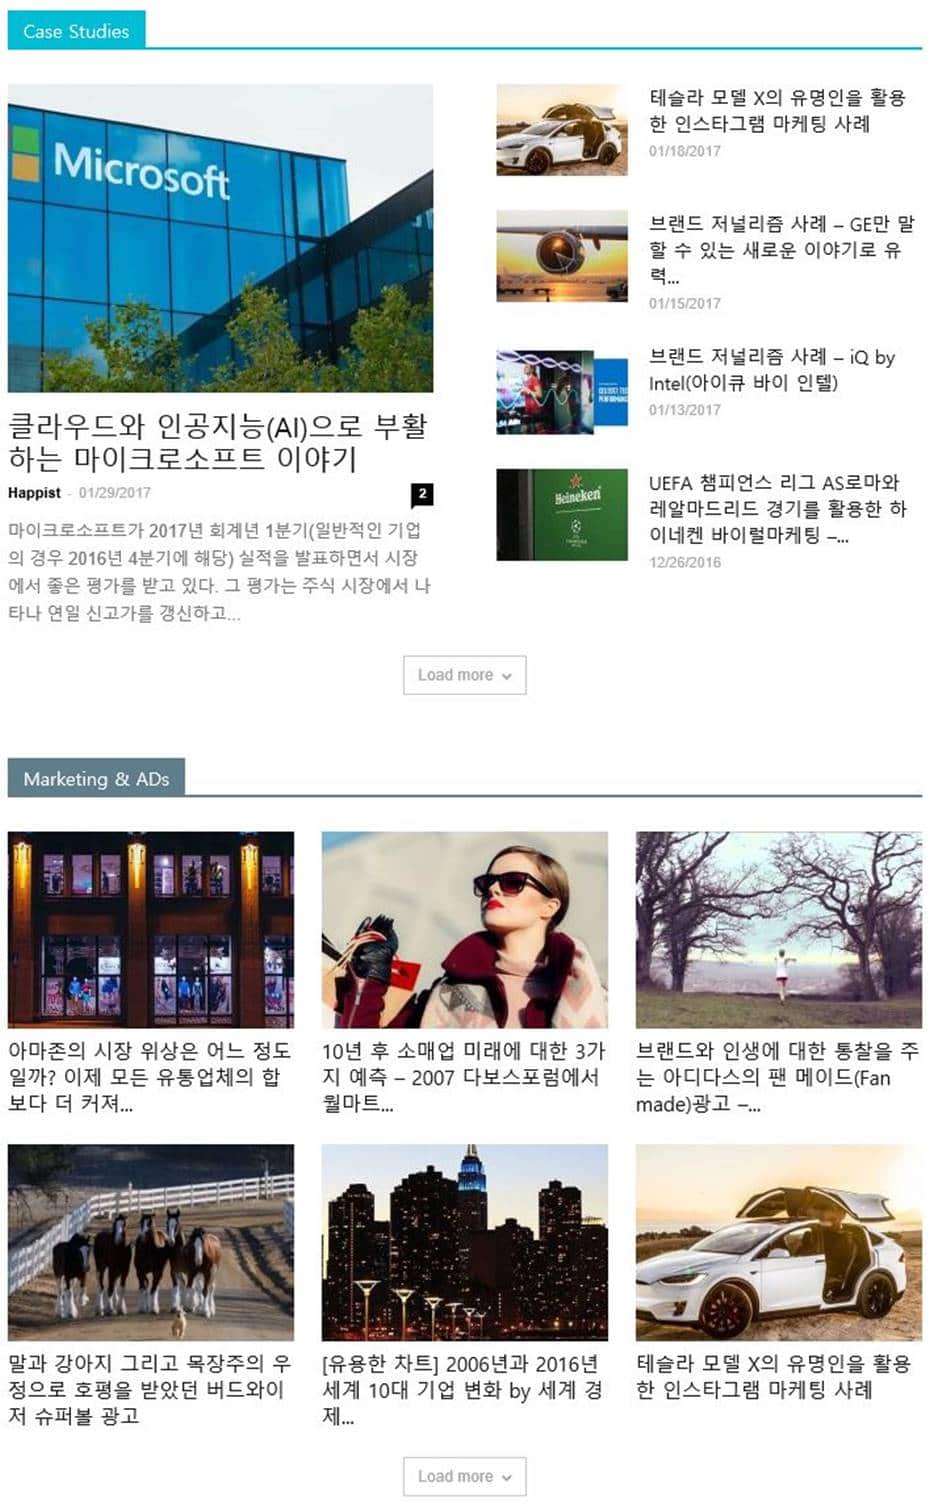 Newspaper7가 적용된 happist.com 카테고리별 신규 포스팅